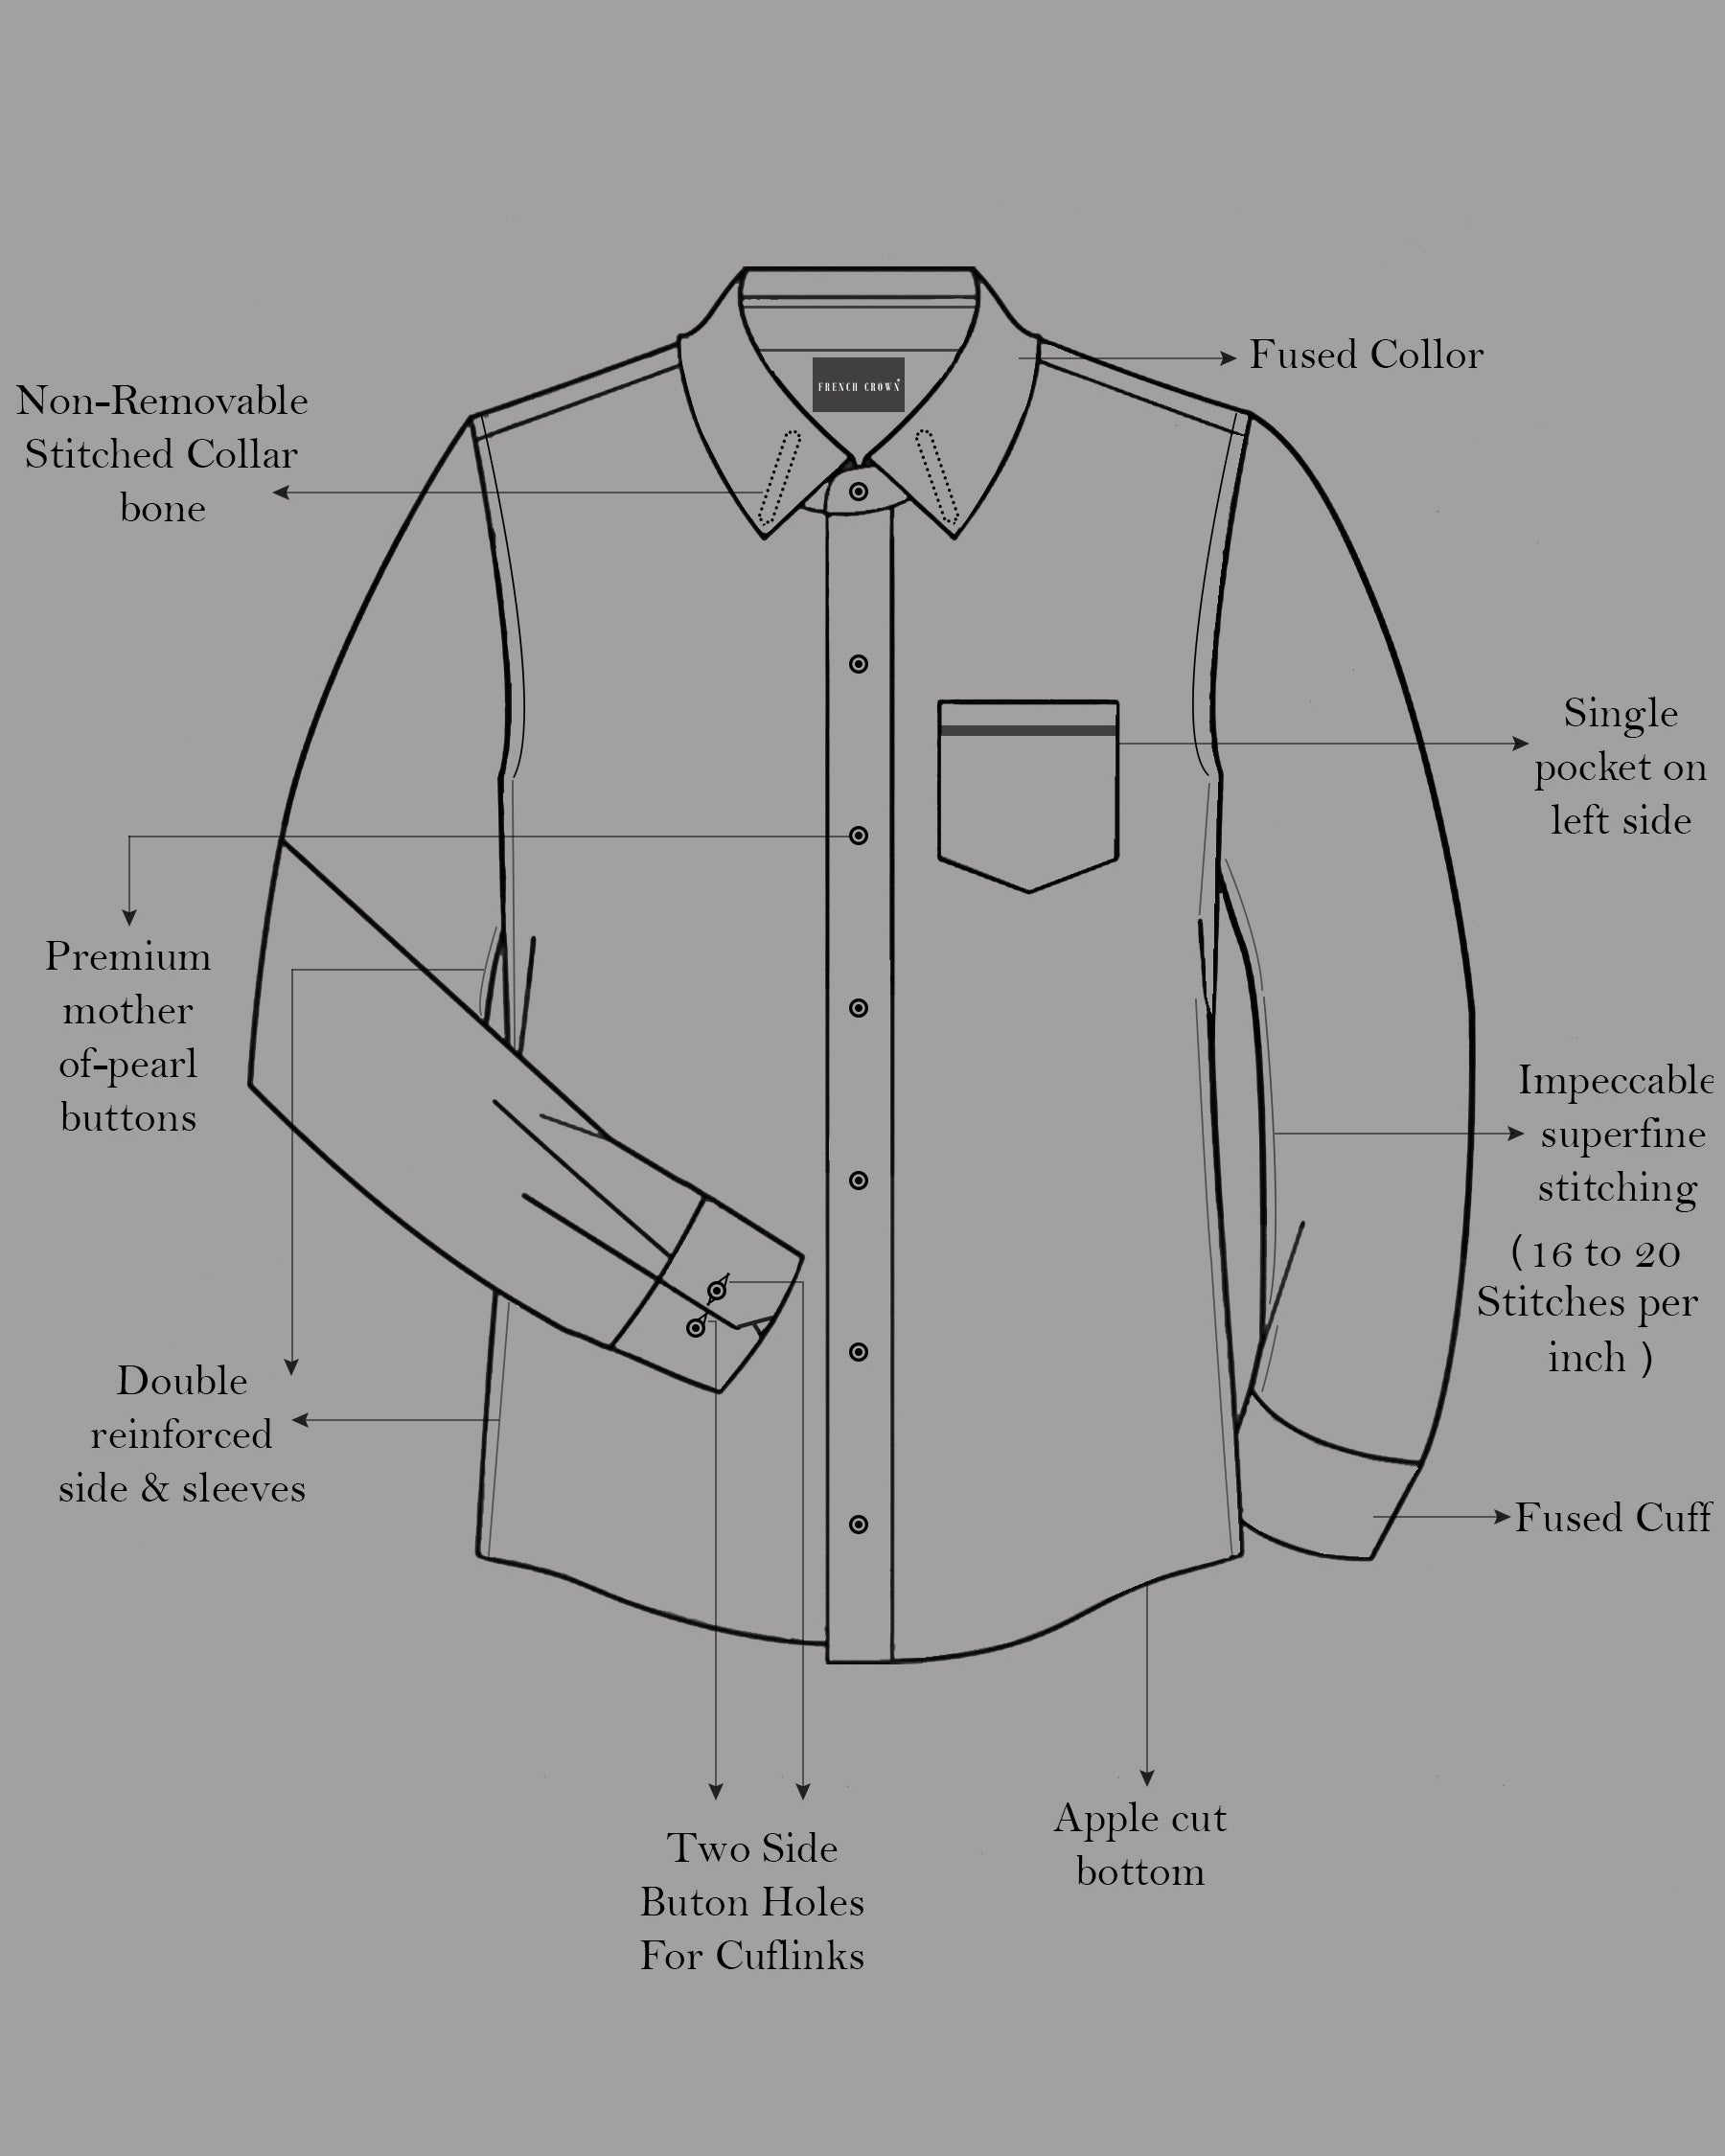 Fuscous Brown with Aubergine Wine and Cadet Gray Striped Block Pattern Premium Cotton Designer Shirt